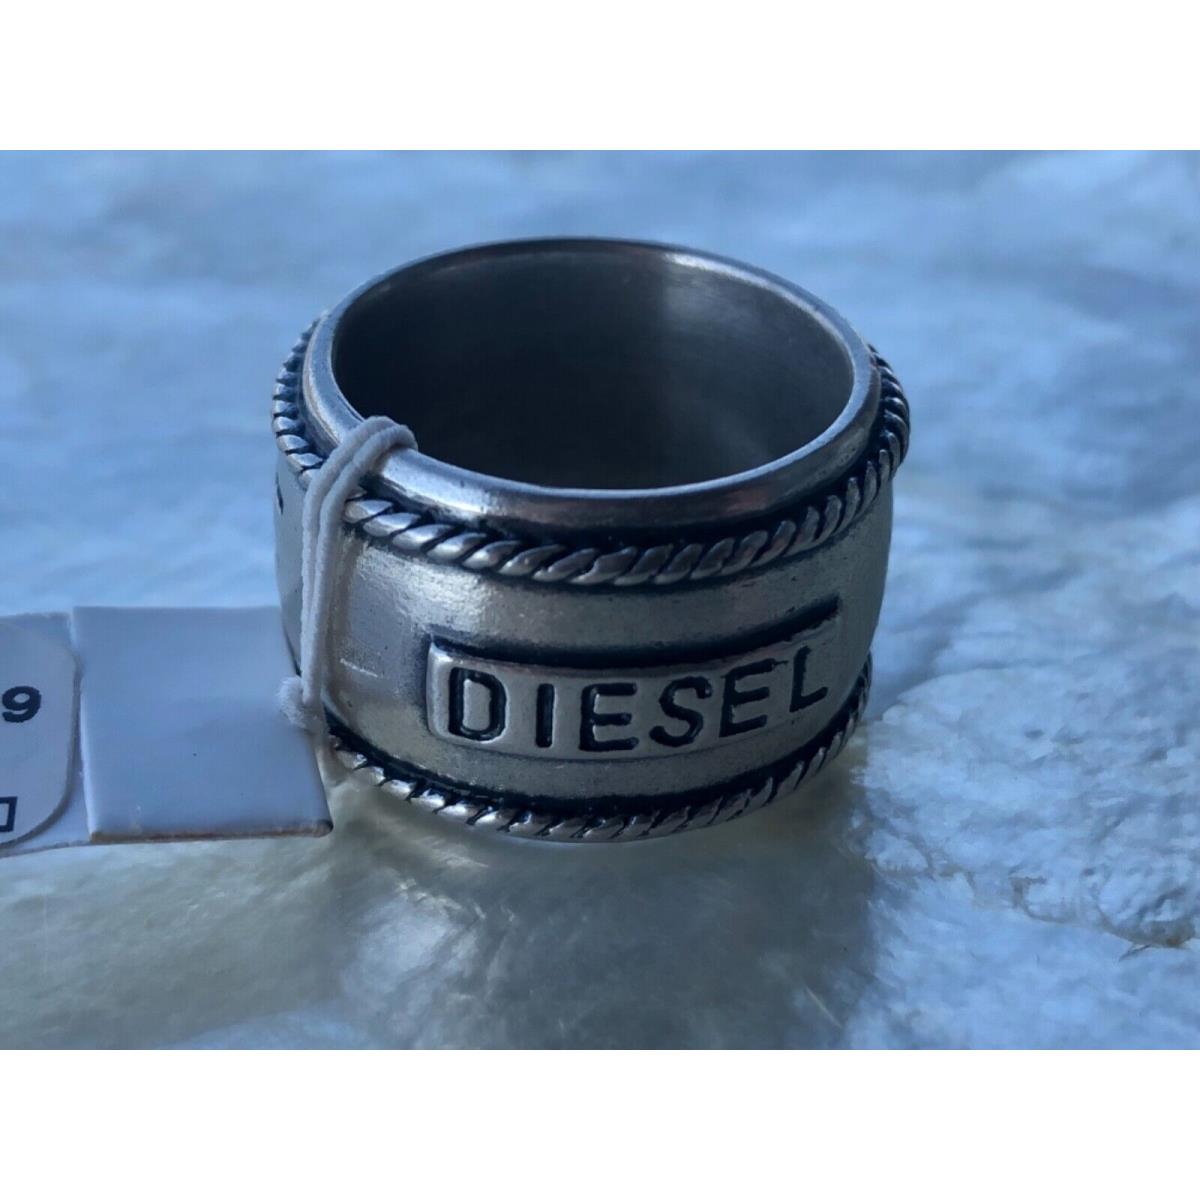 Diesel Nmd Thk Bnd .925 Sterling Silver Ring - Size 7